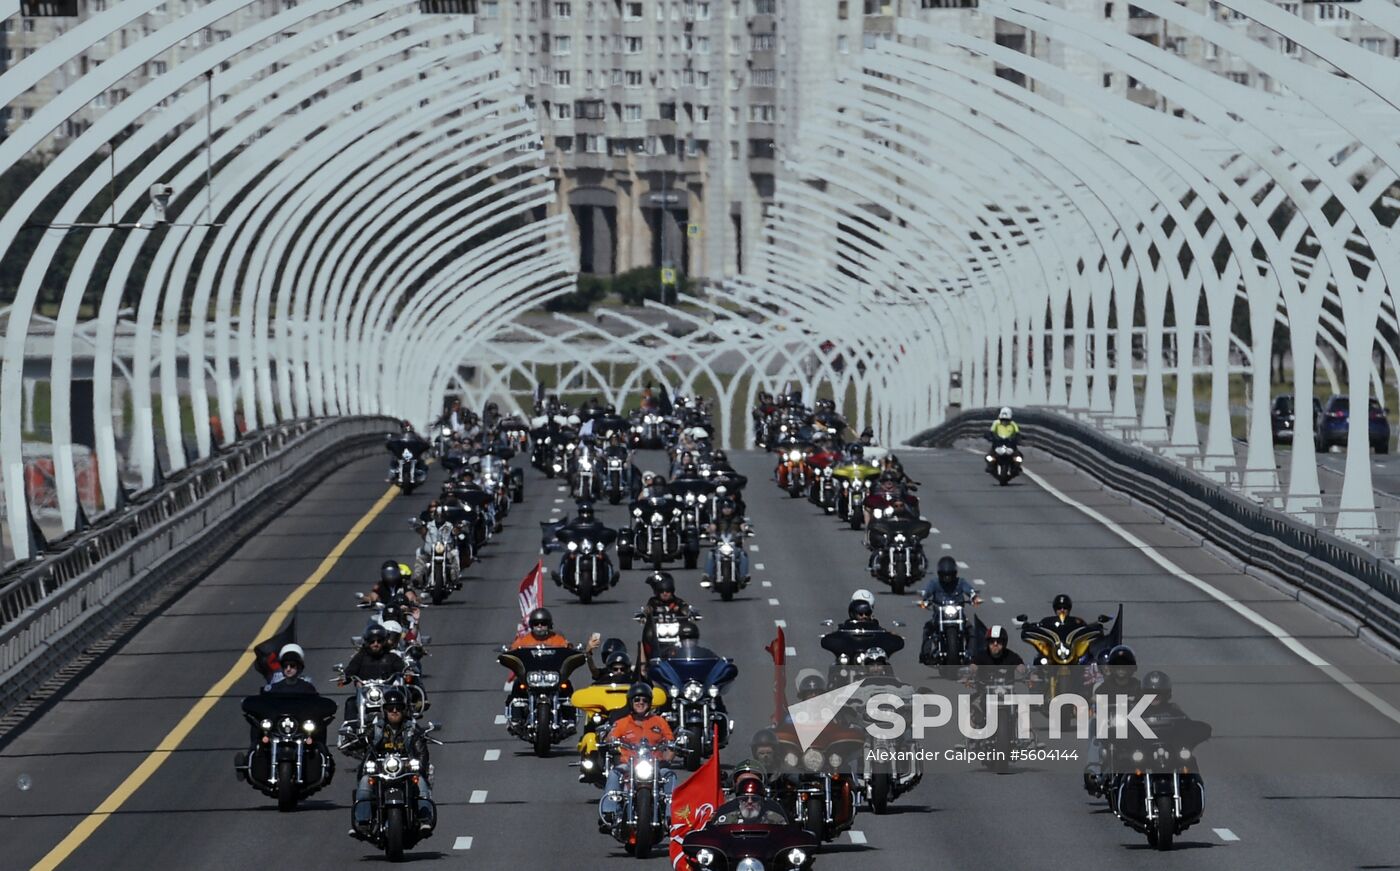 St.Petersburg Harley Days motor festival